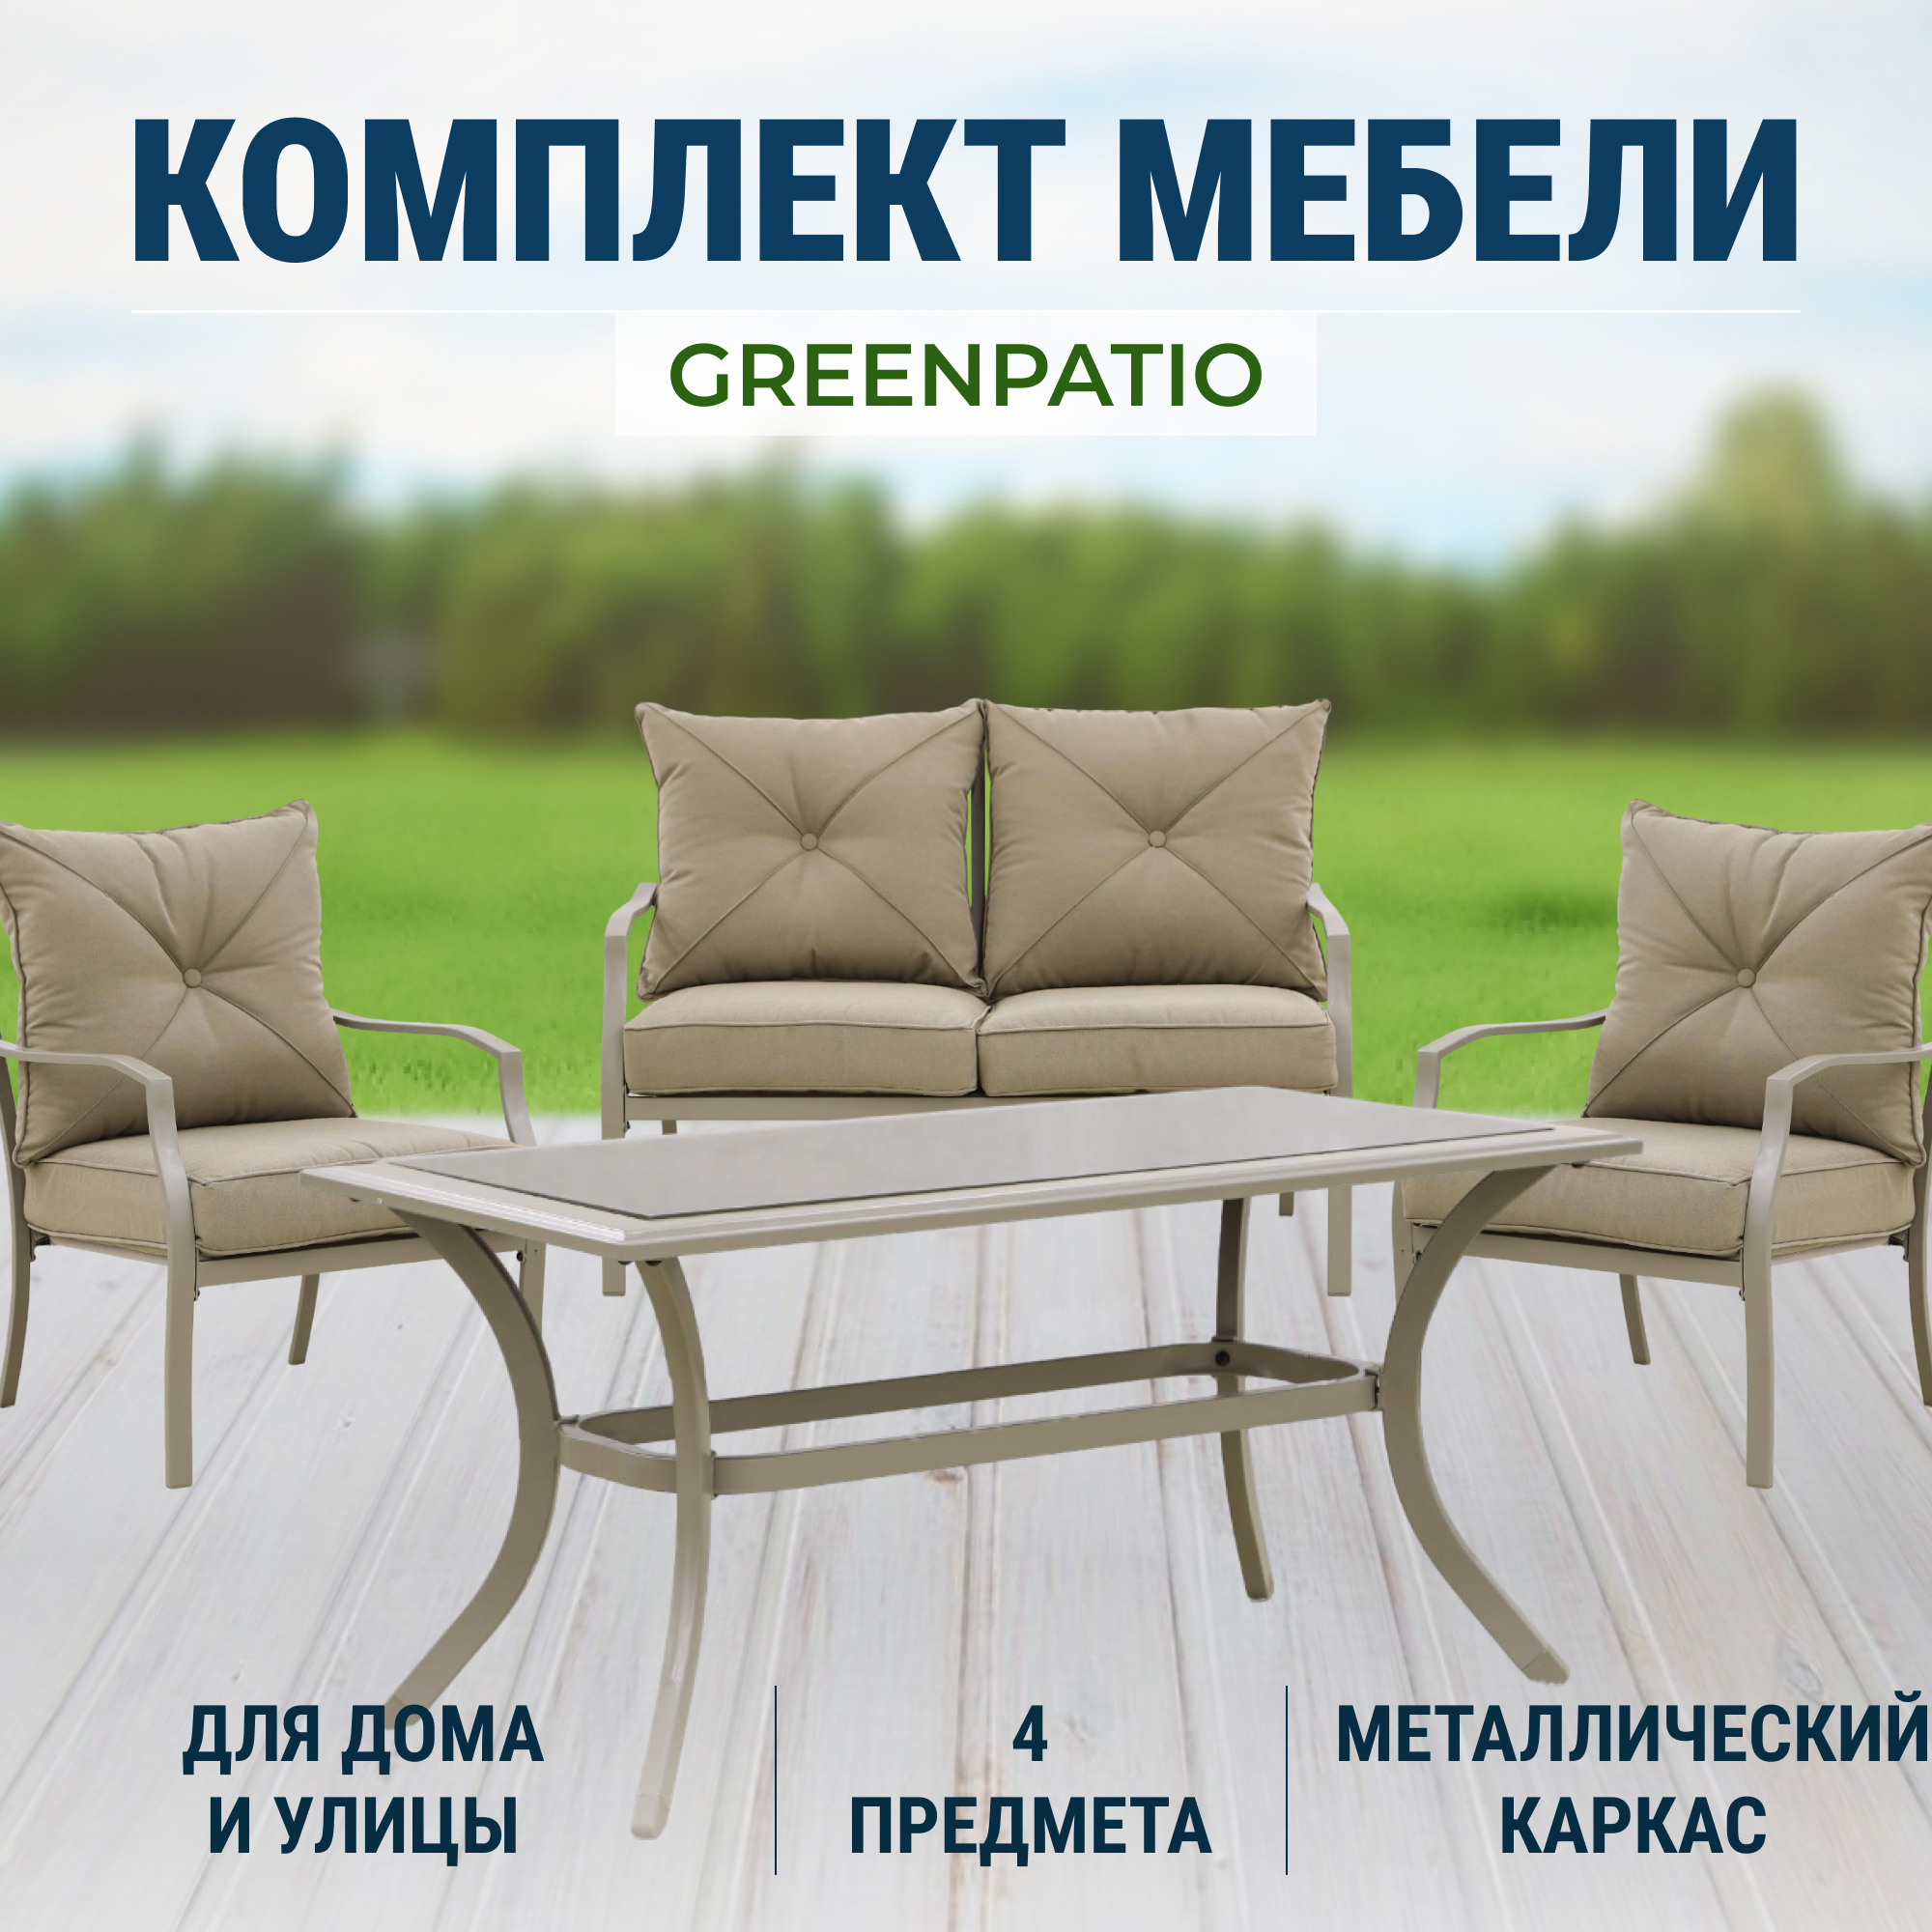 Комплект мебели Greenpatio из 4 предметов (870), цвет бежевый, размер 74.5х116.5х81.5 - фото 2